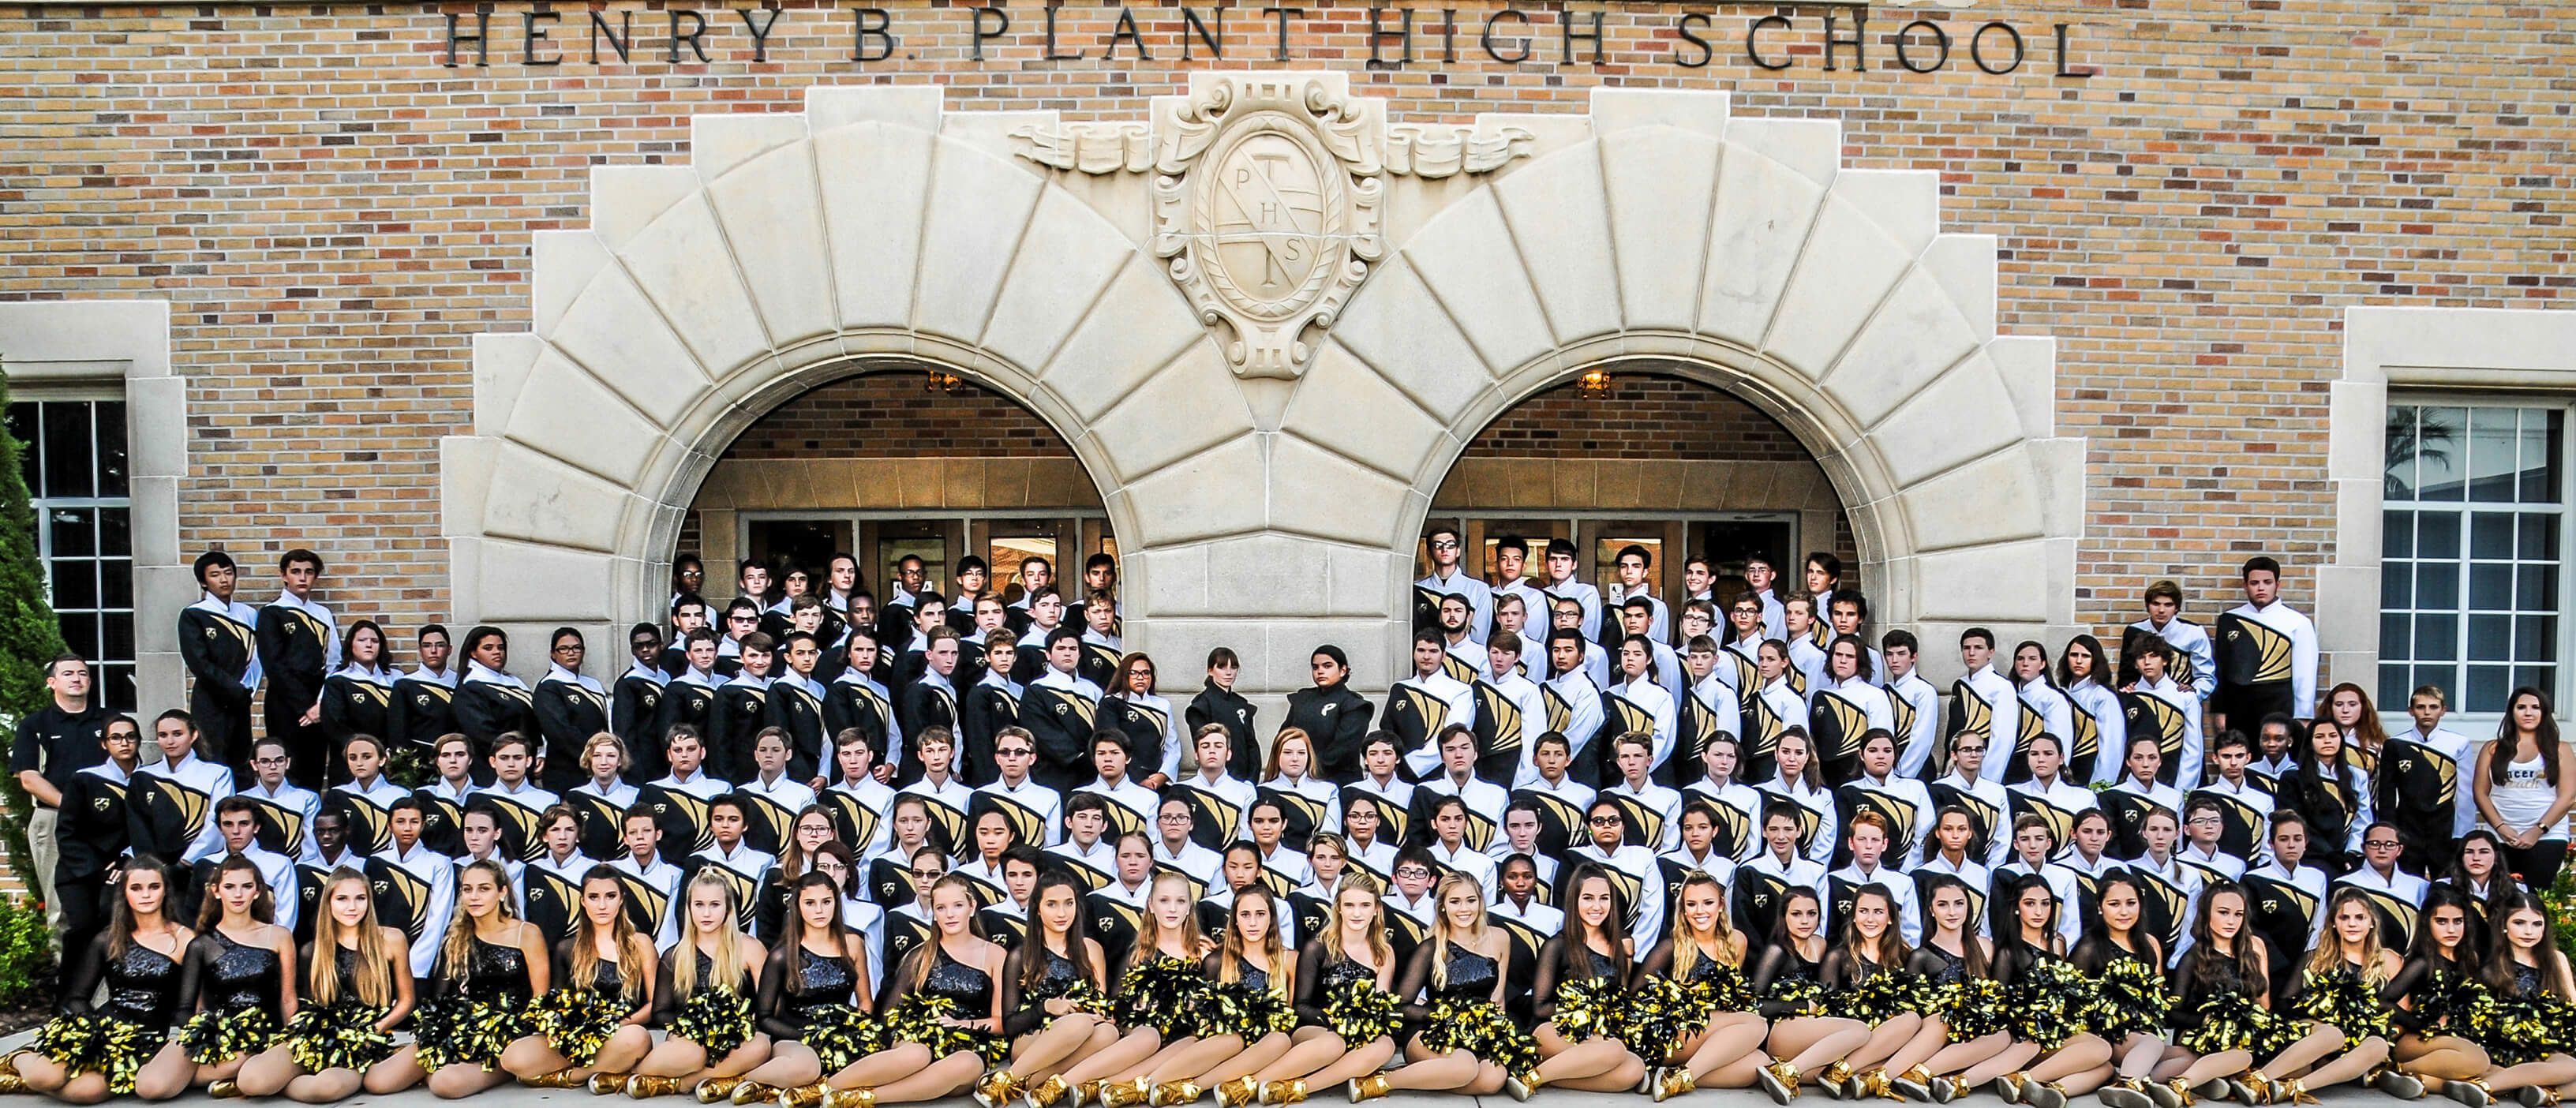 Plant High School Band 2016-2017